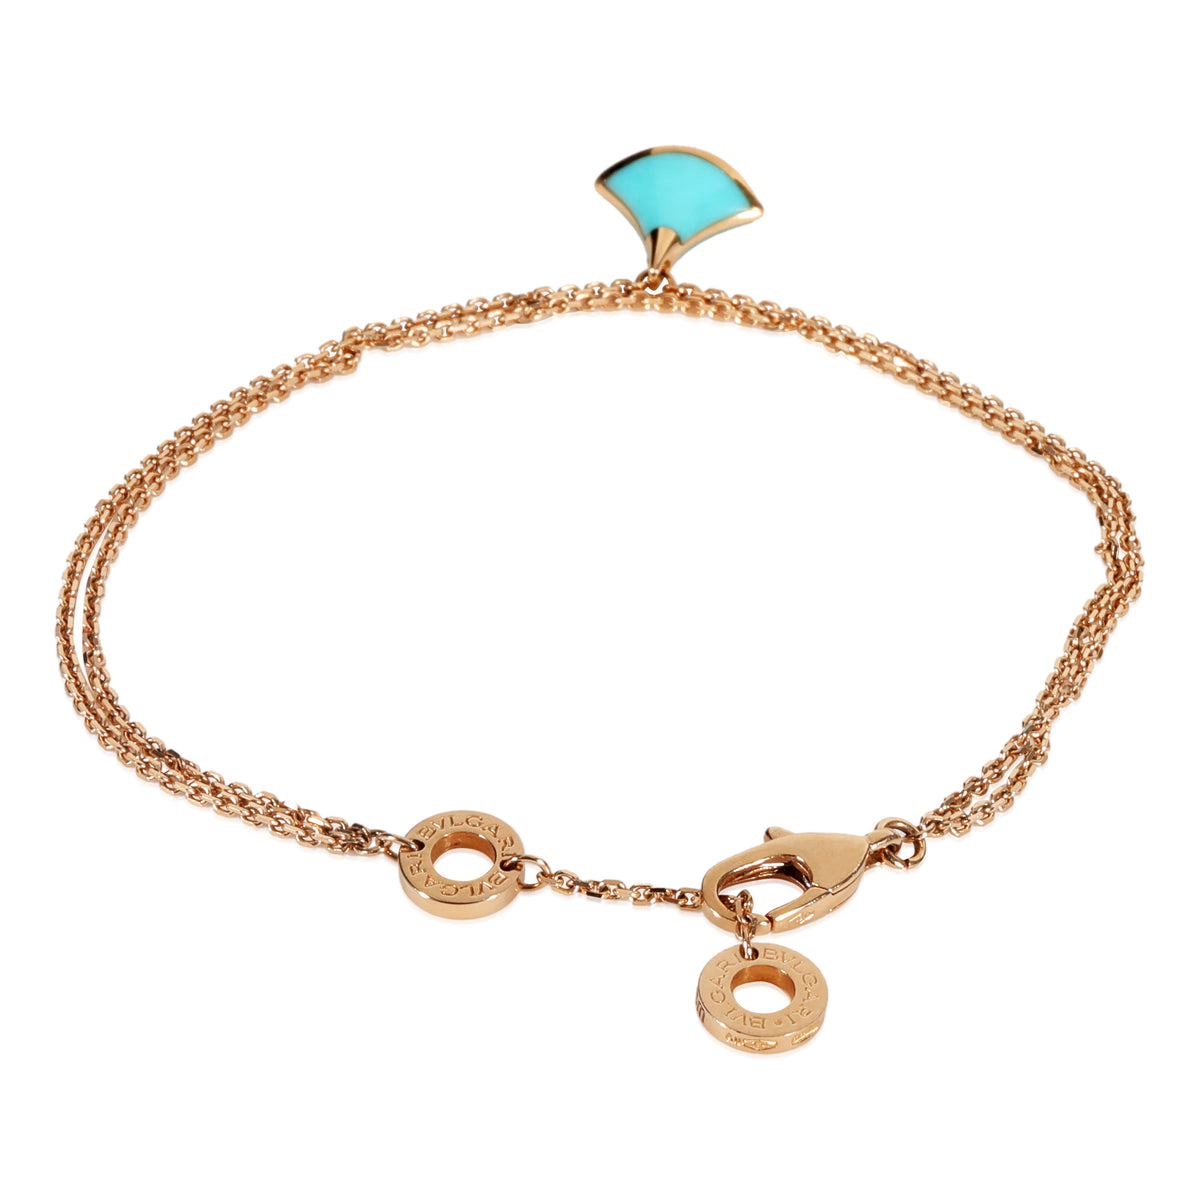 Bvlgari Diva's Dream Bracelet With Turquoise in 18K Rose Gold